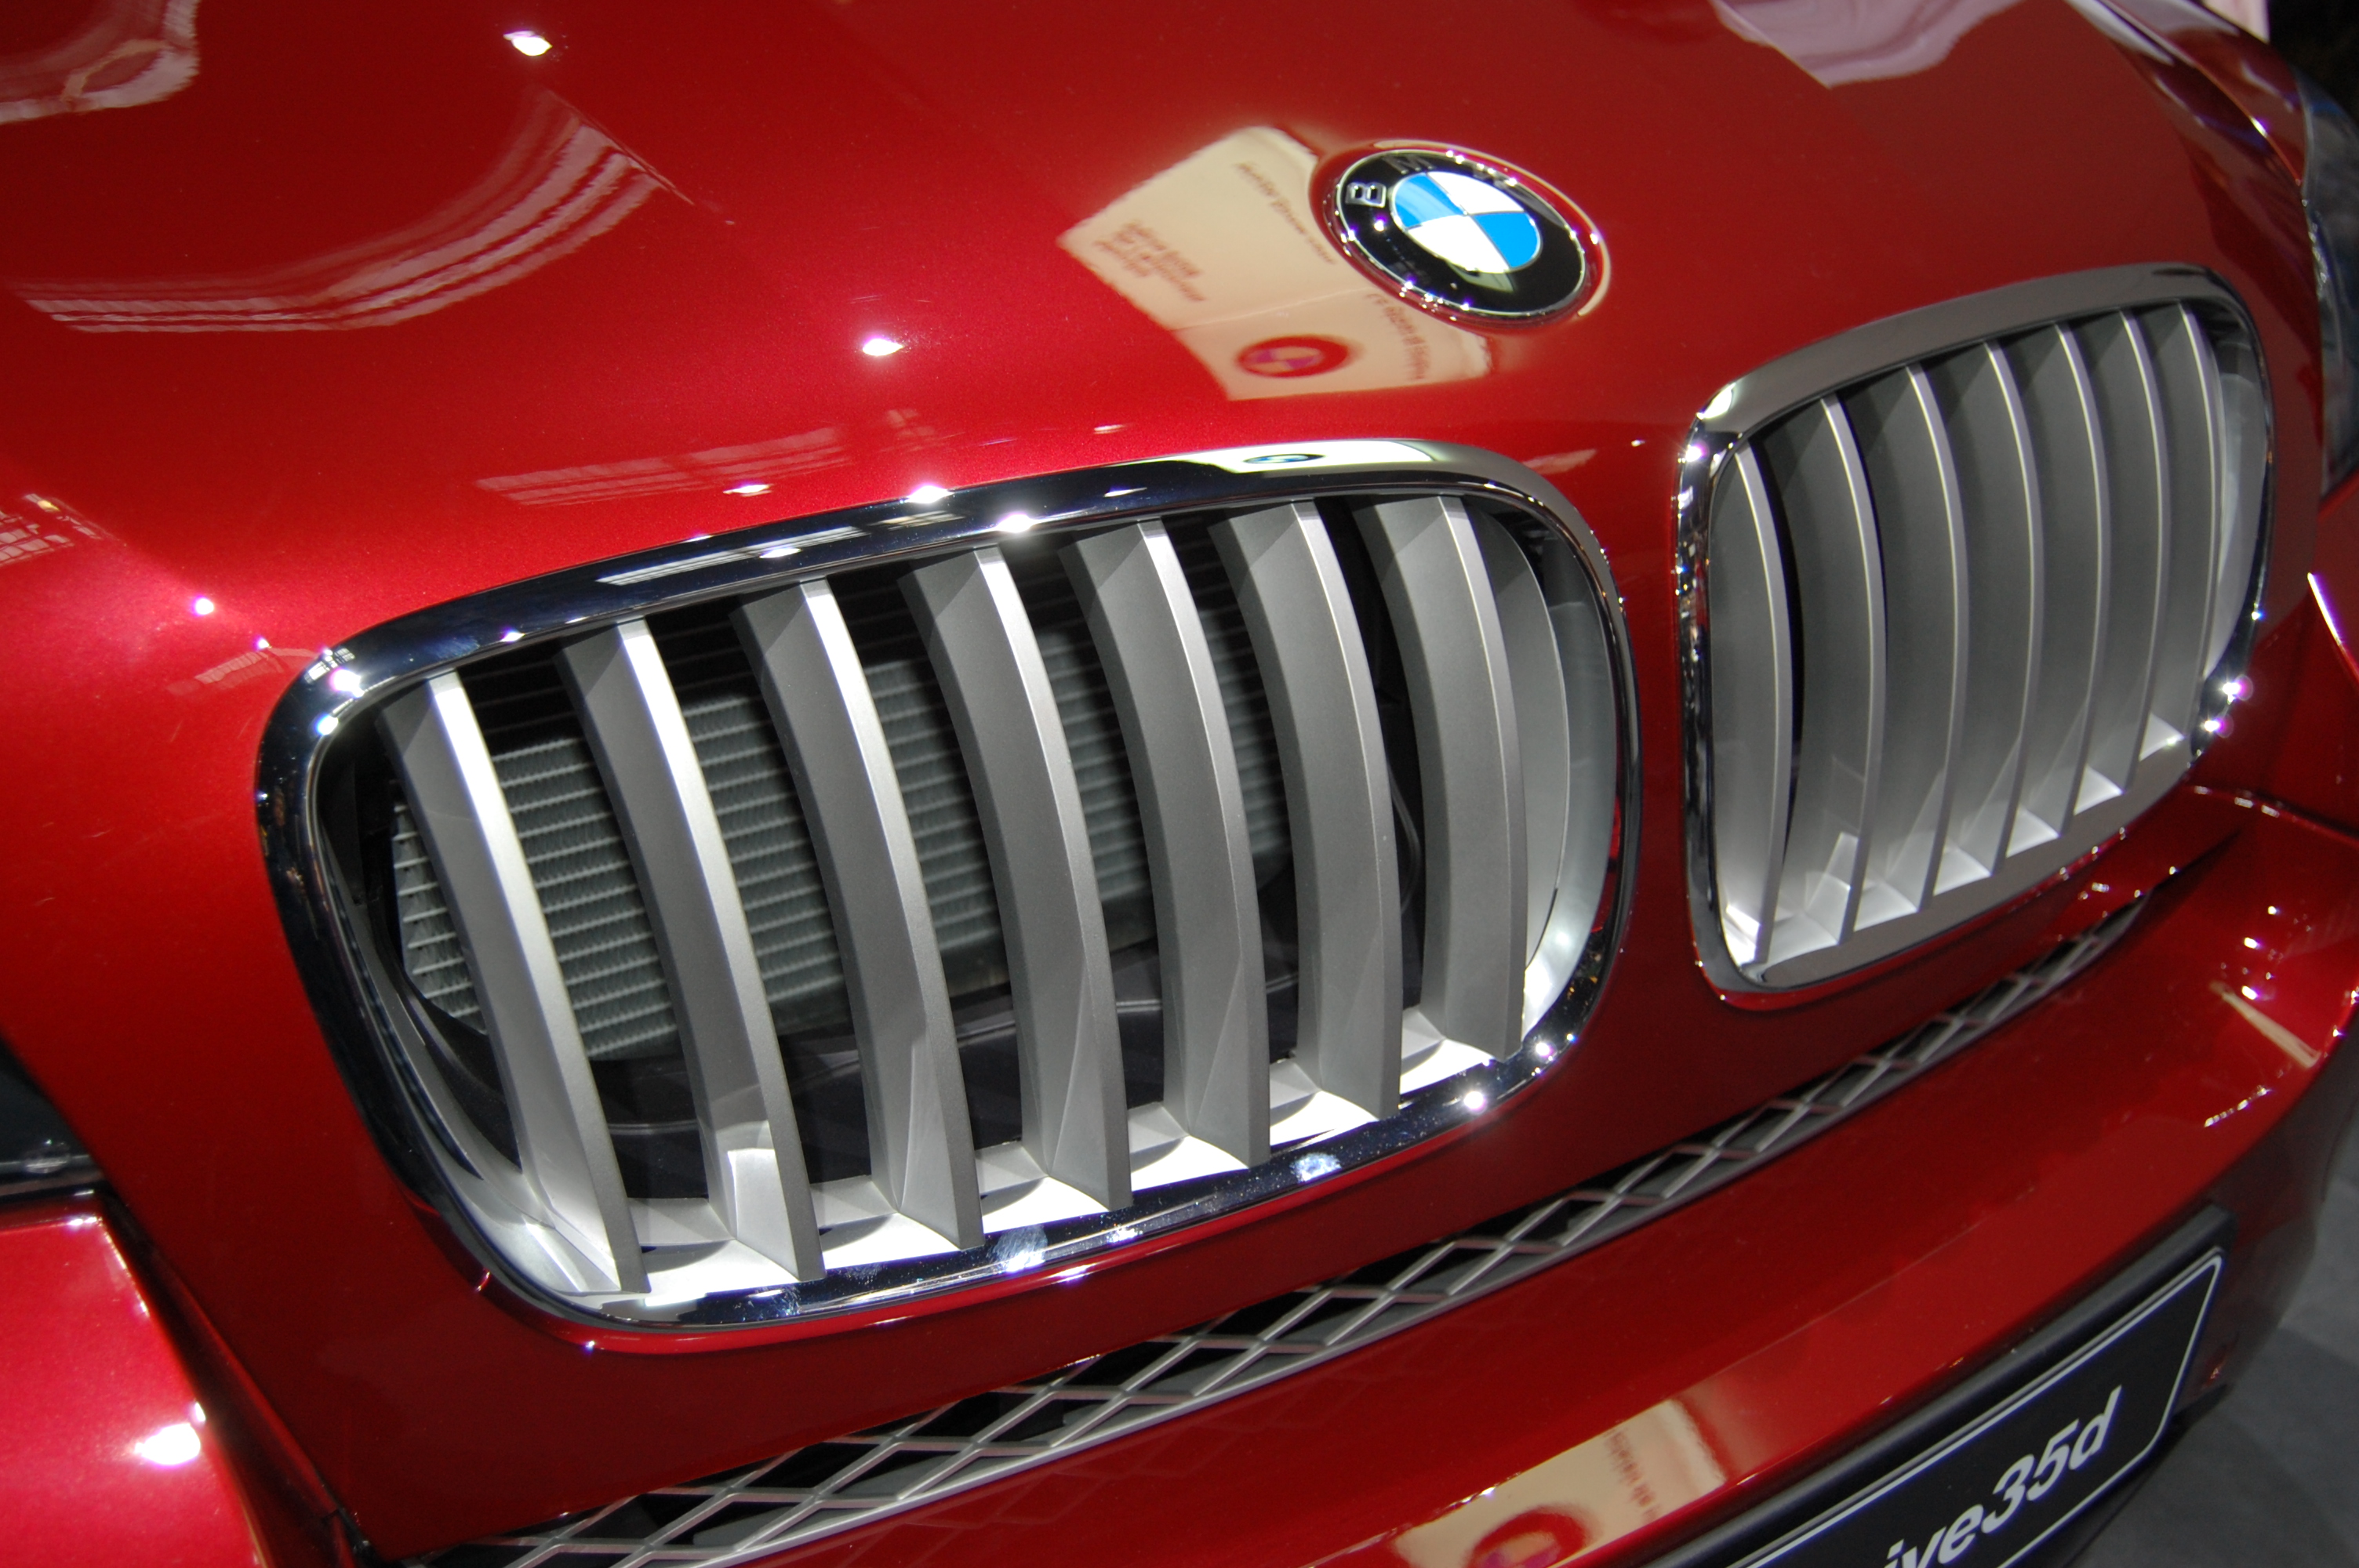 BMW X6 xDrive35d | Flickr - Photo Sharing!